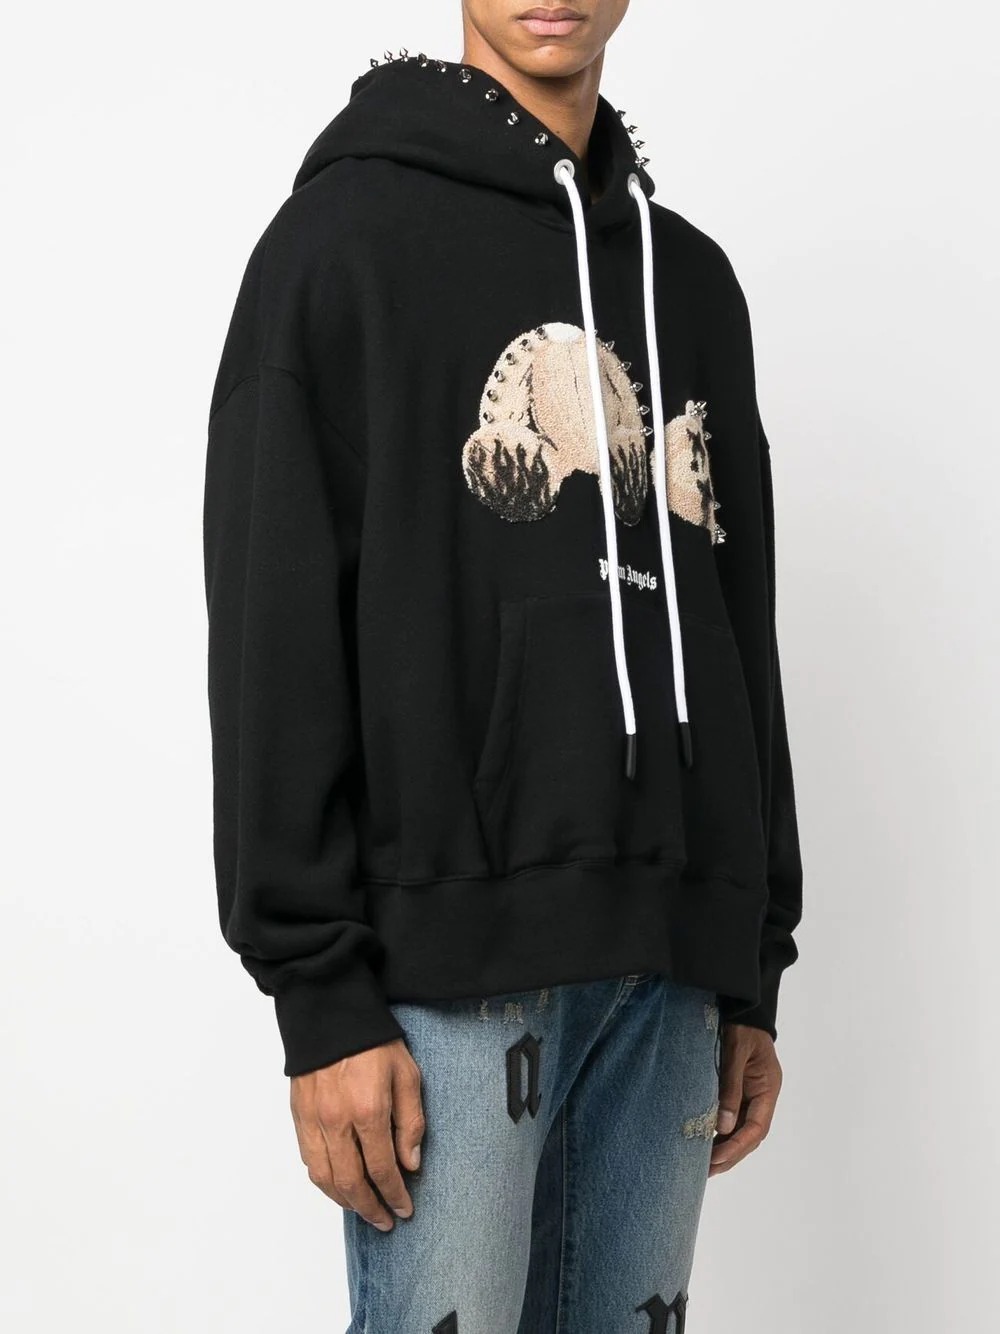 Men's Palm Angels Designer Sweatshirts & Hoodies